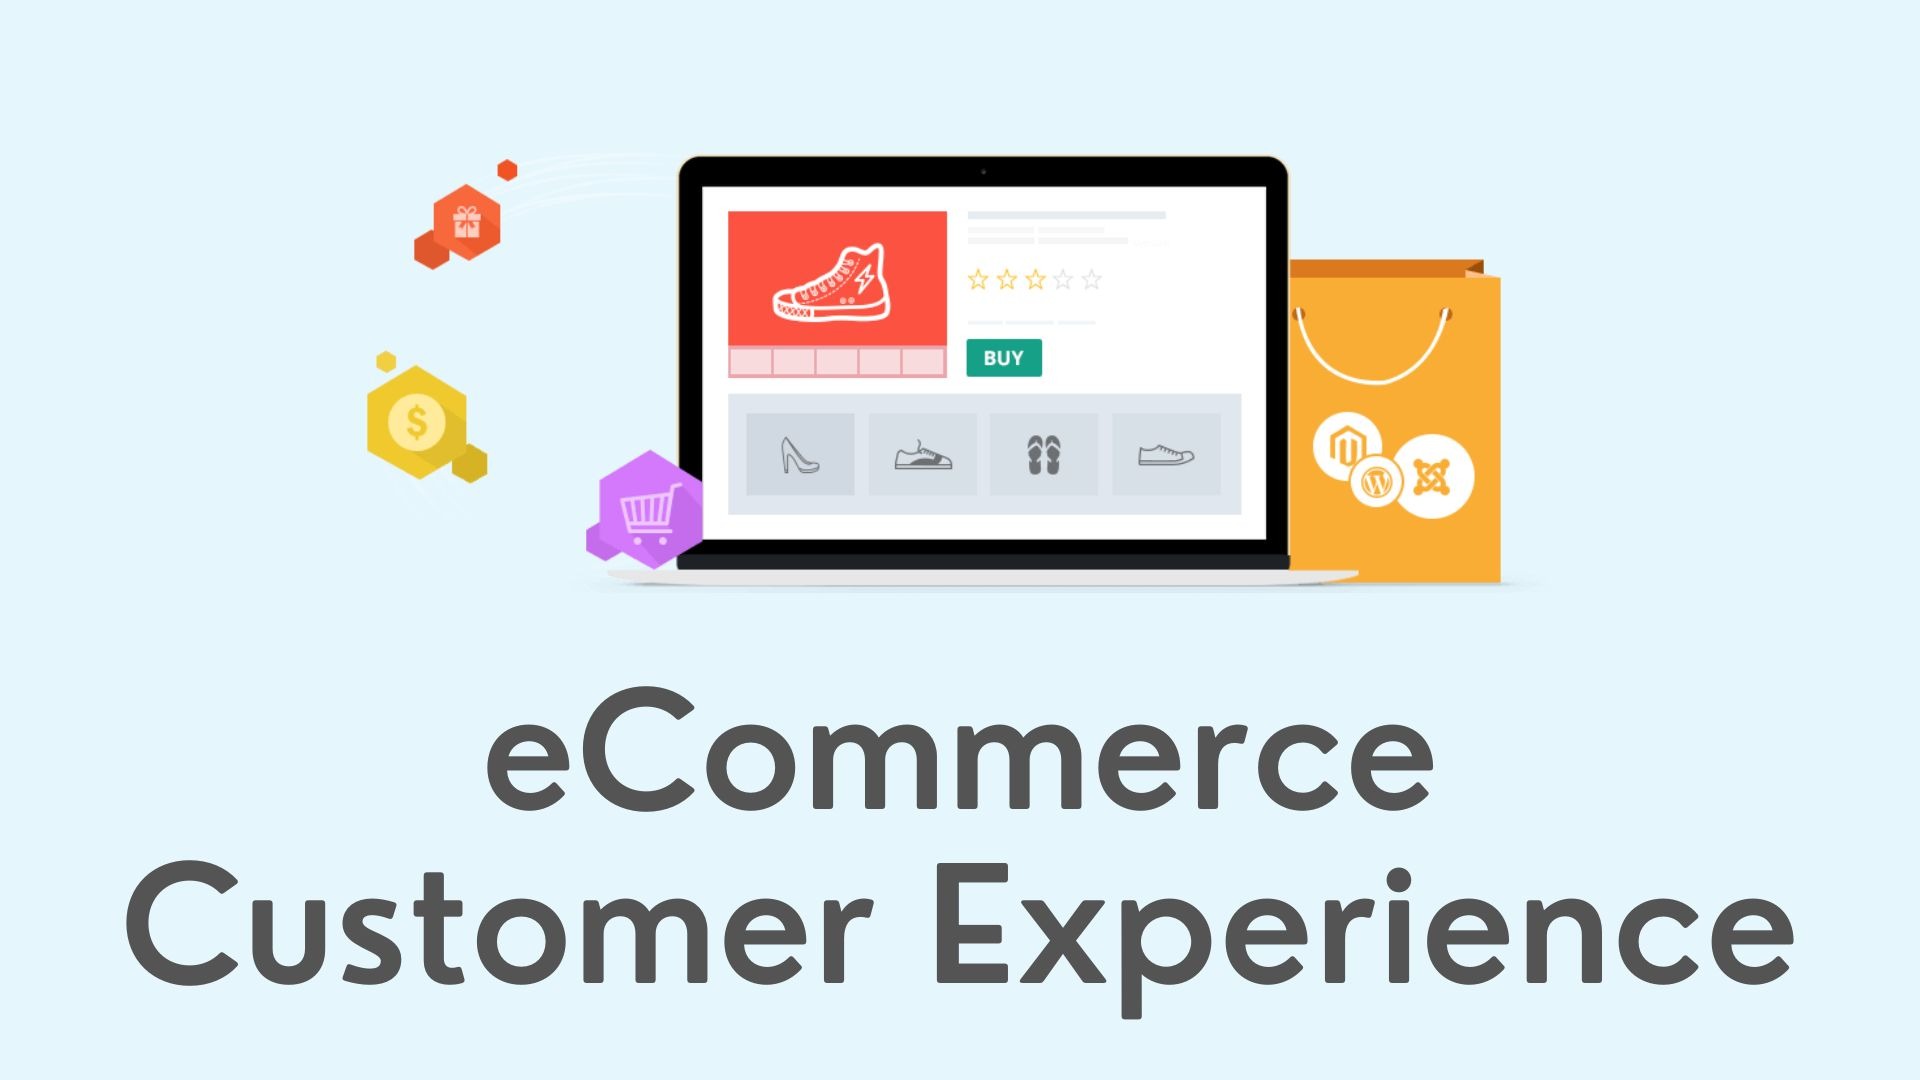 eCommerce Customer Experience